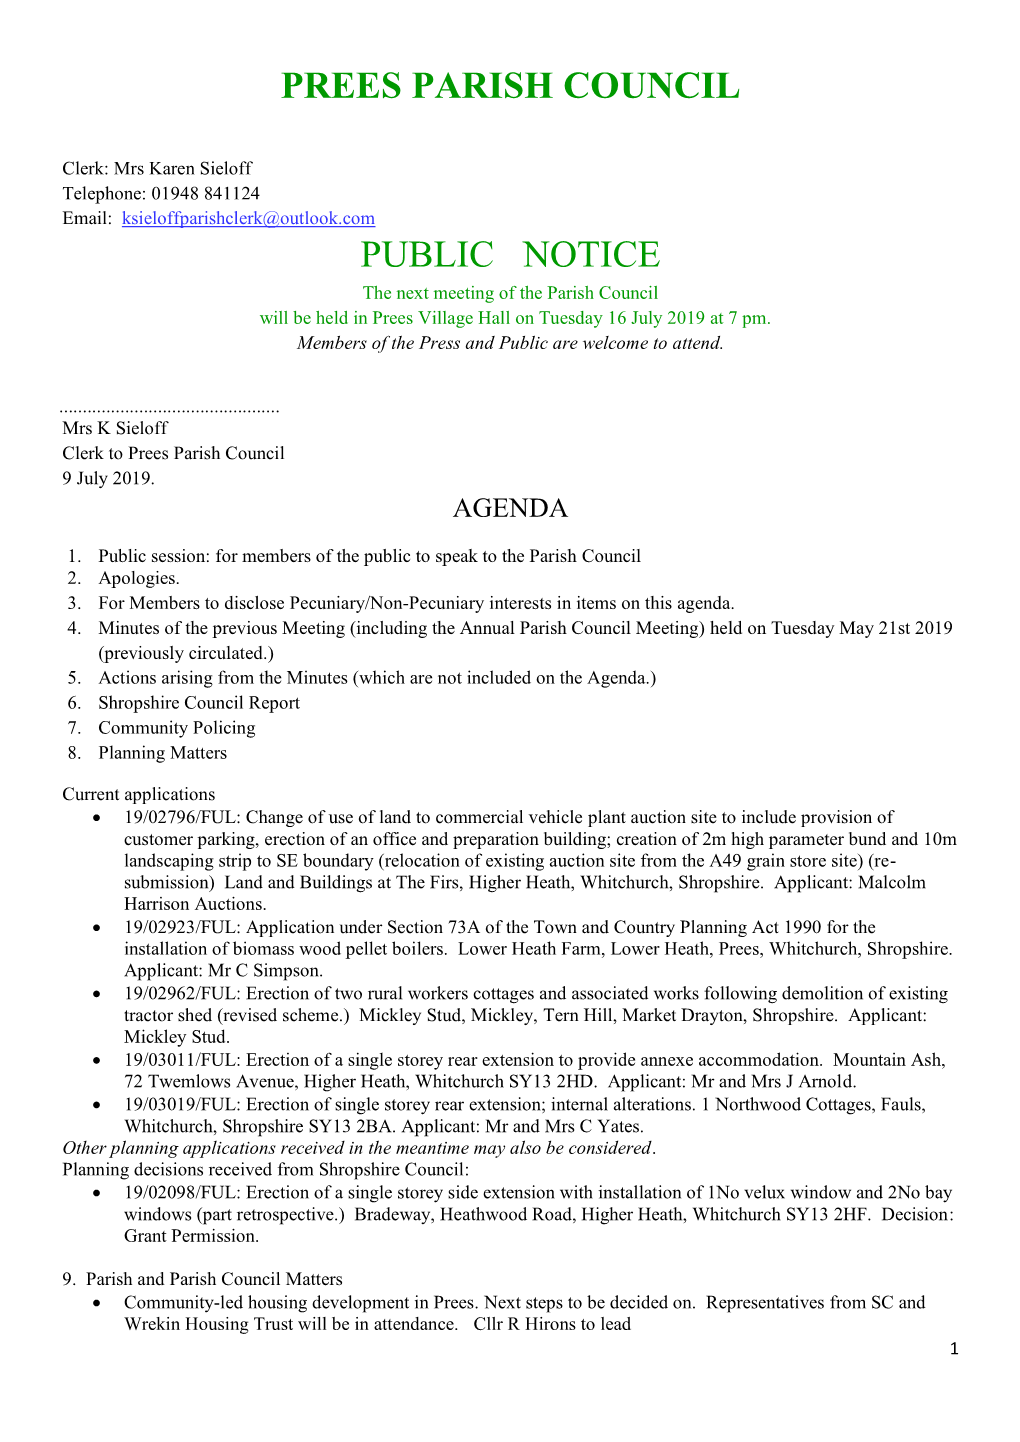 Prees Parish Council Public Notice